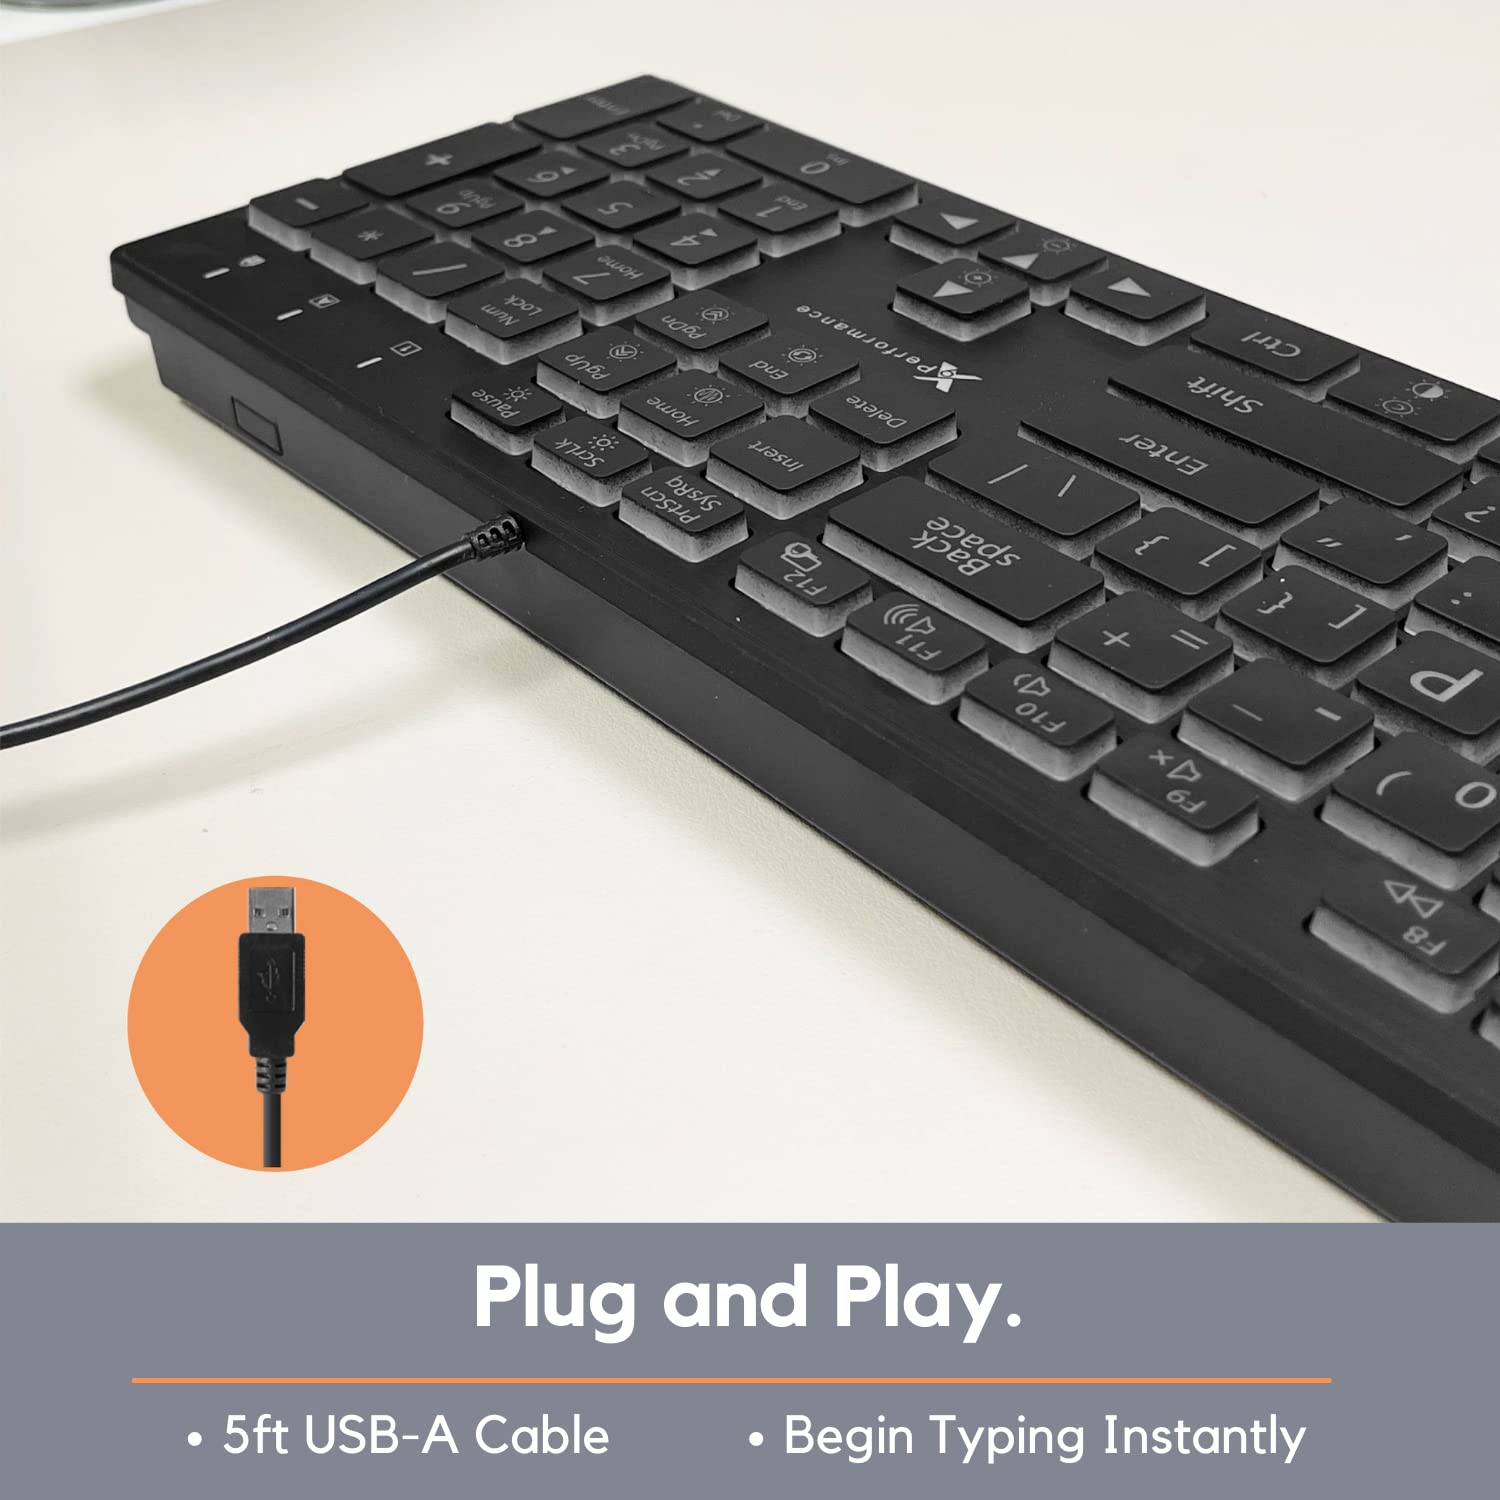 X9 Performance バックライト付き大型プリントキーボード - 見やすくタイプしやすい - 高齢者や視覚障害者向けのライトアップキーボード - USB有線ライト付きキーボード 7色 特大文字 - 見やすいキーボード